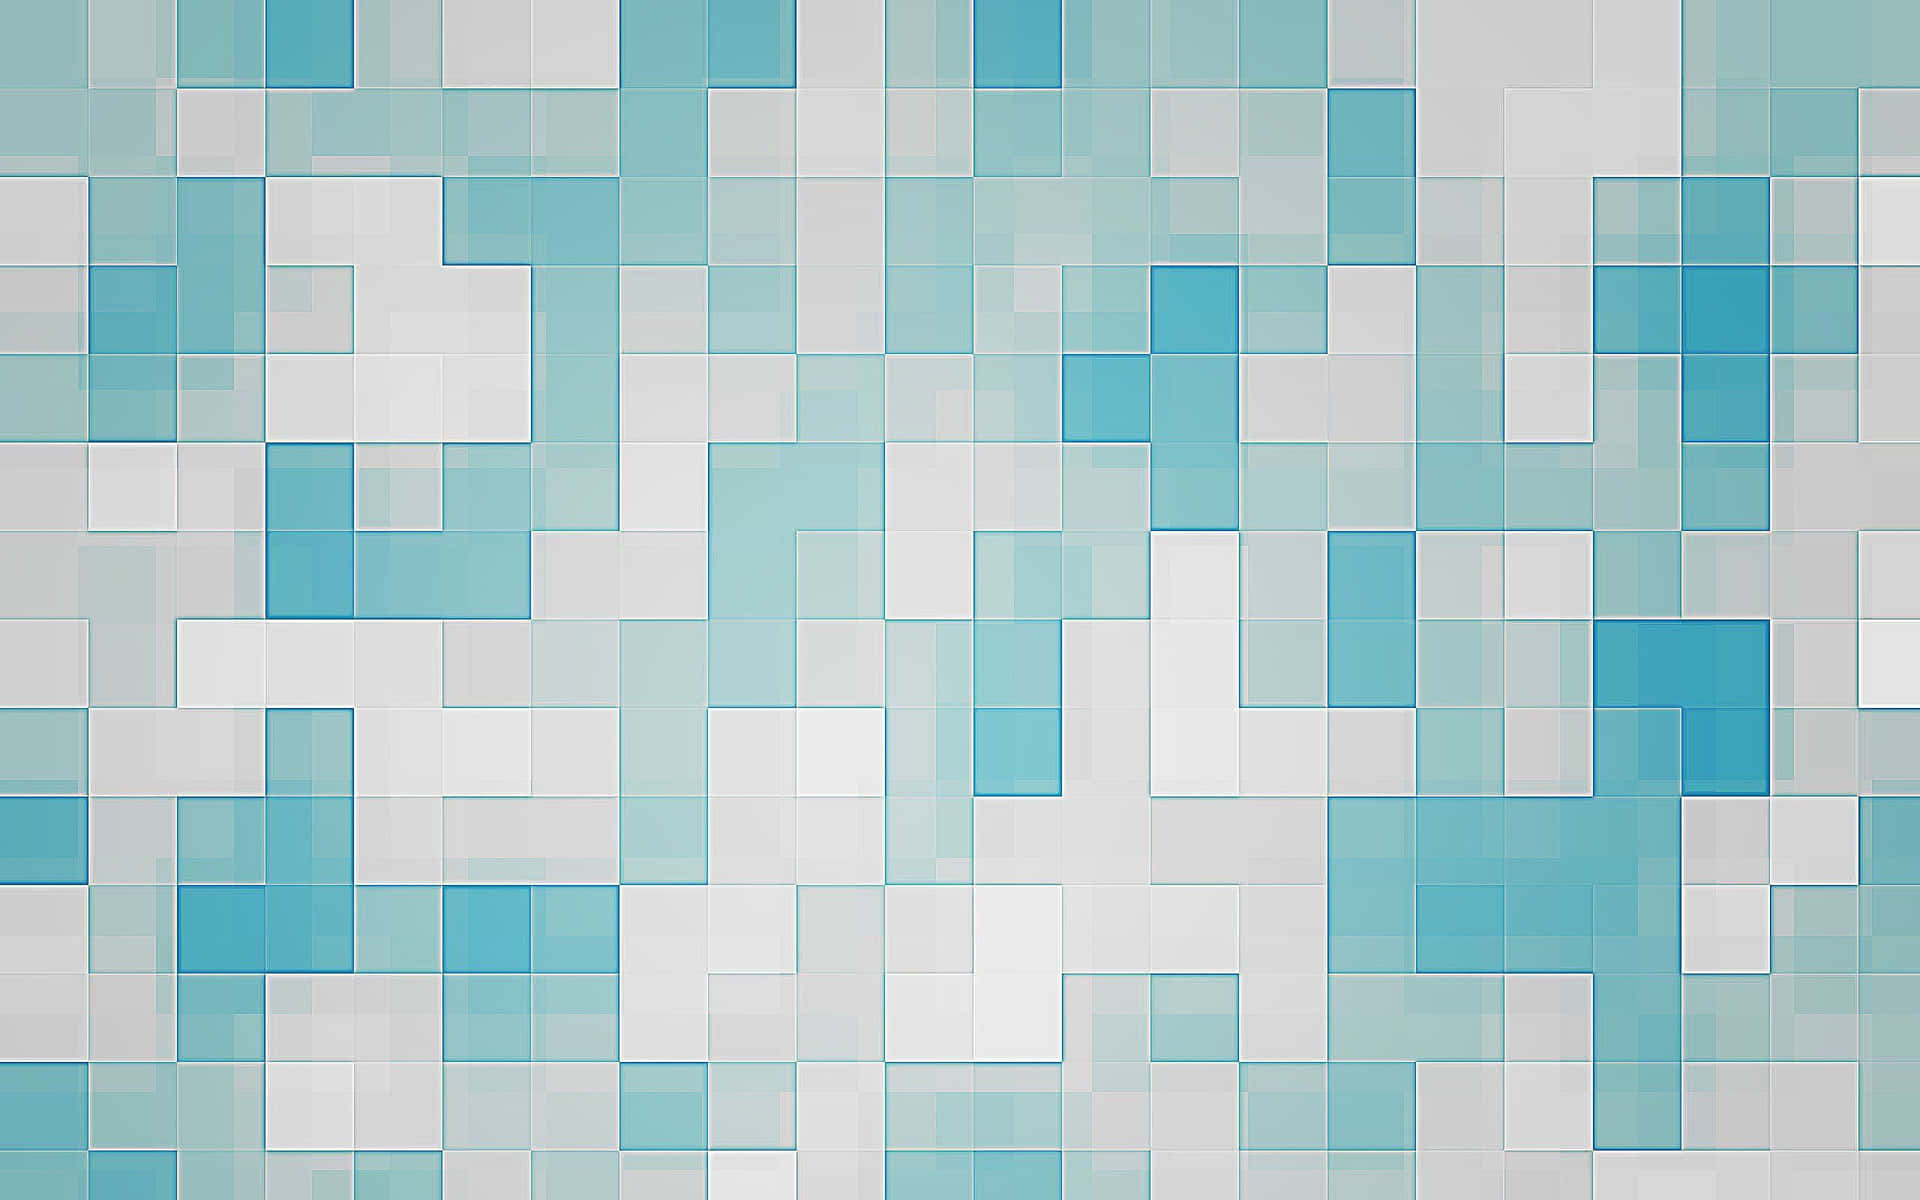 Bright Background Of Tetris-Like Pattern